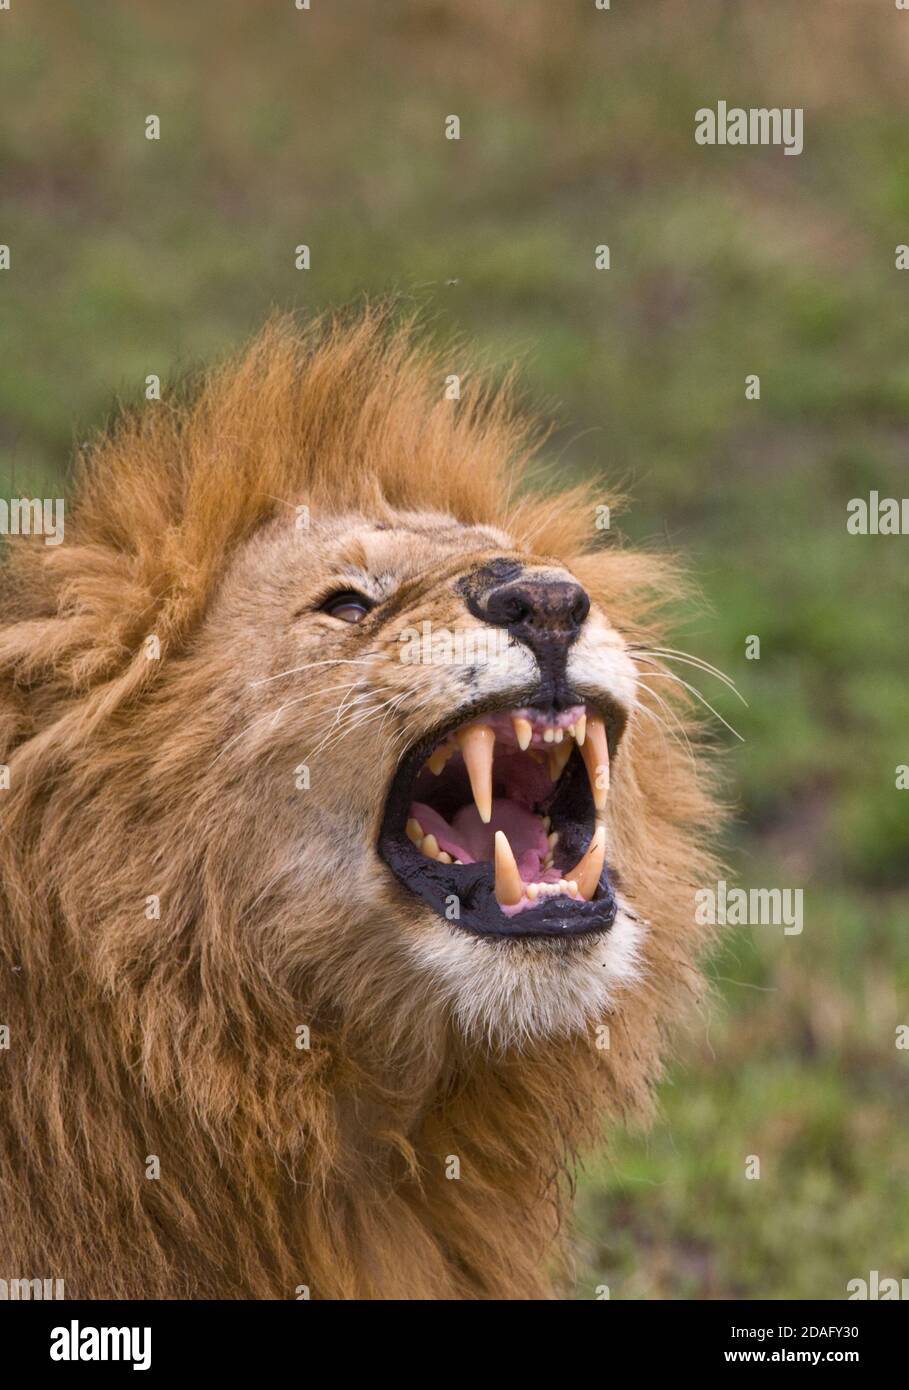 Lion, Masai Mara, Kenya Banque D'Images